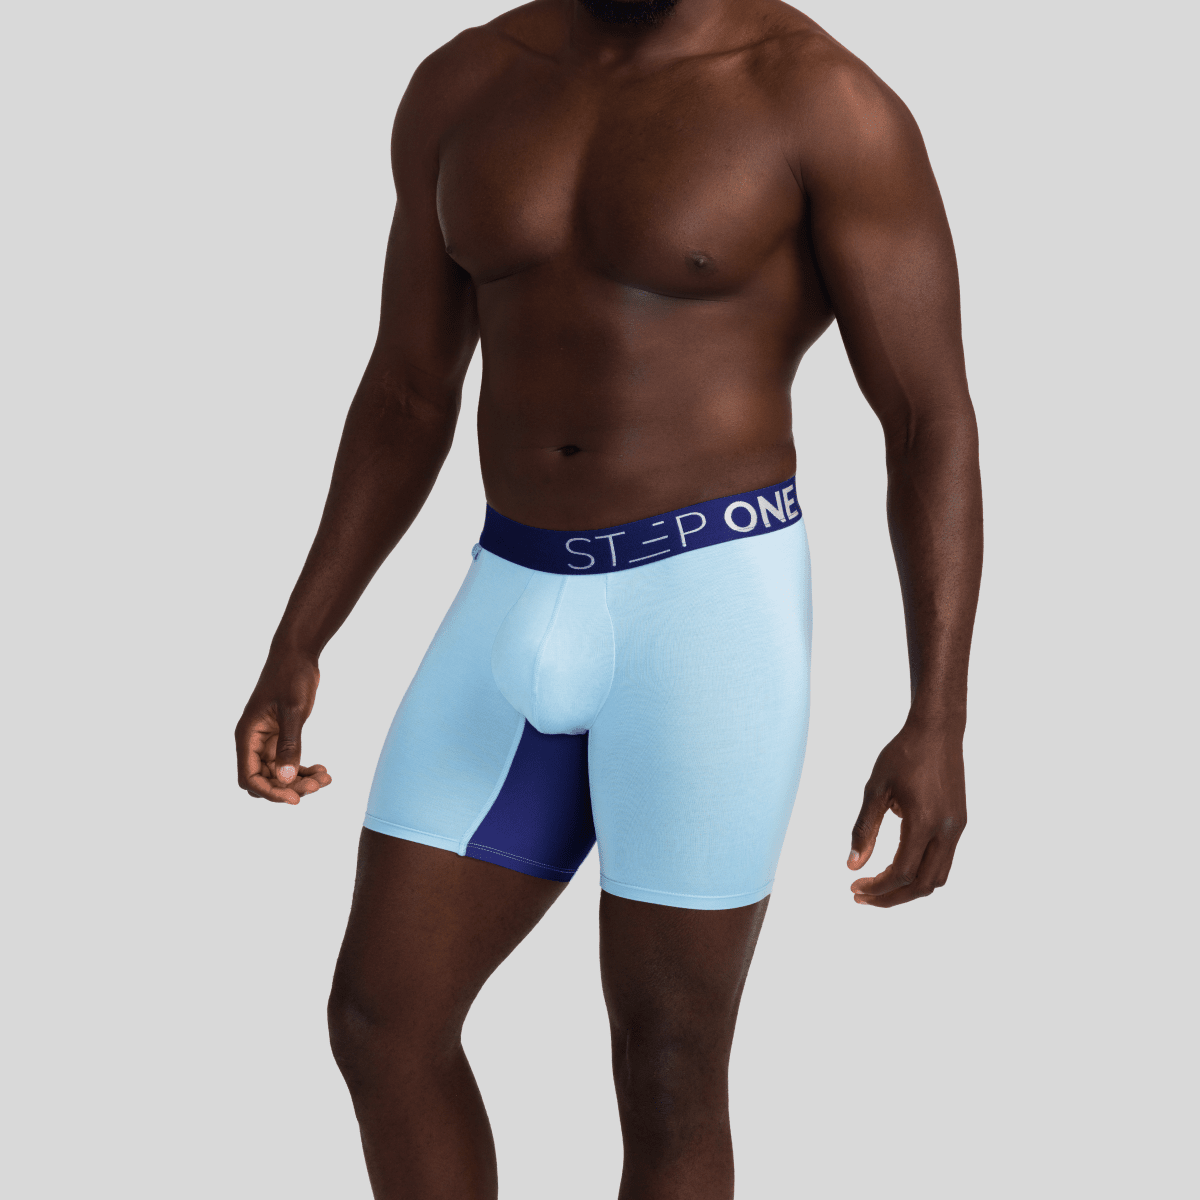 Men's Bamboo Underwear in Blue